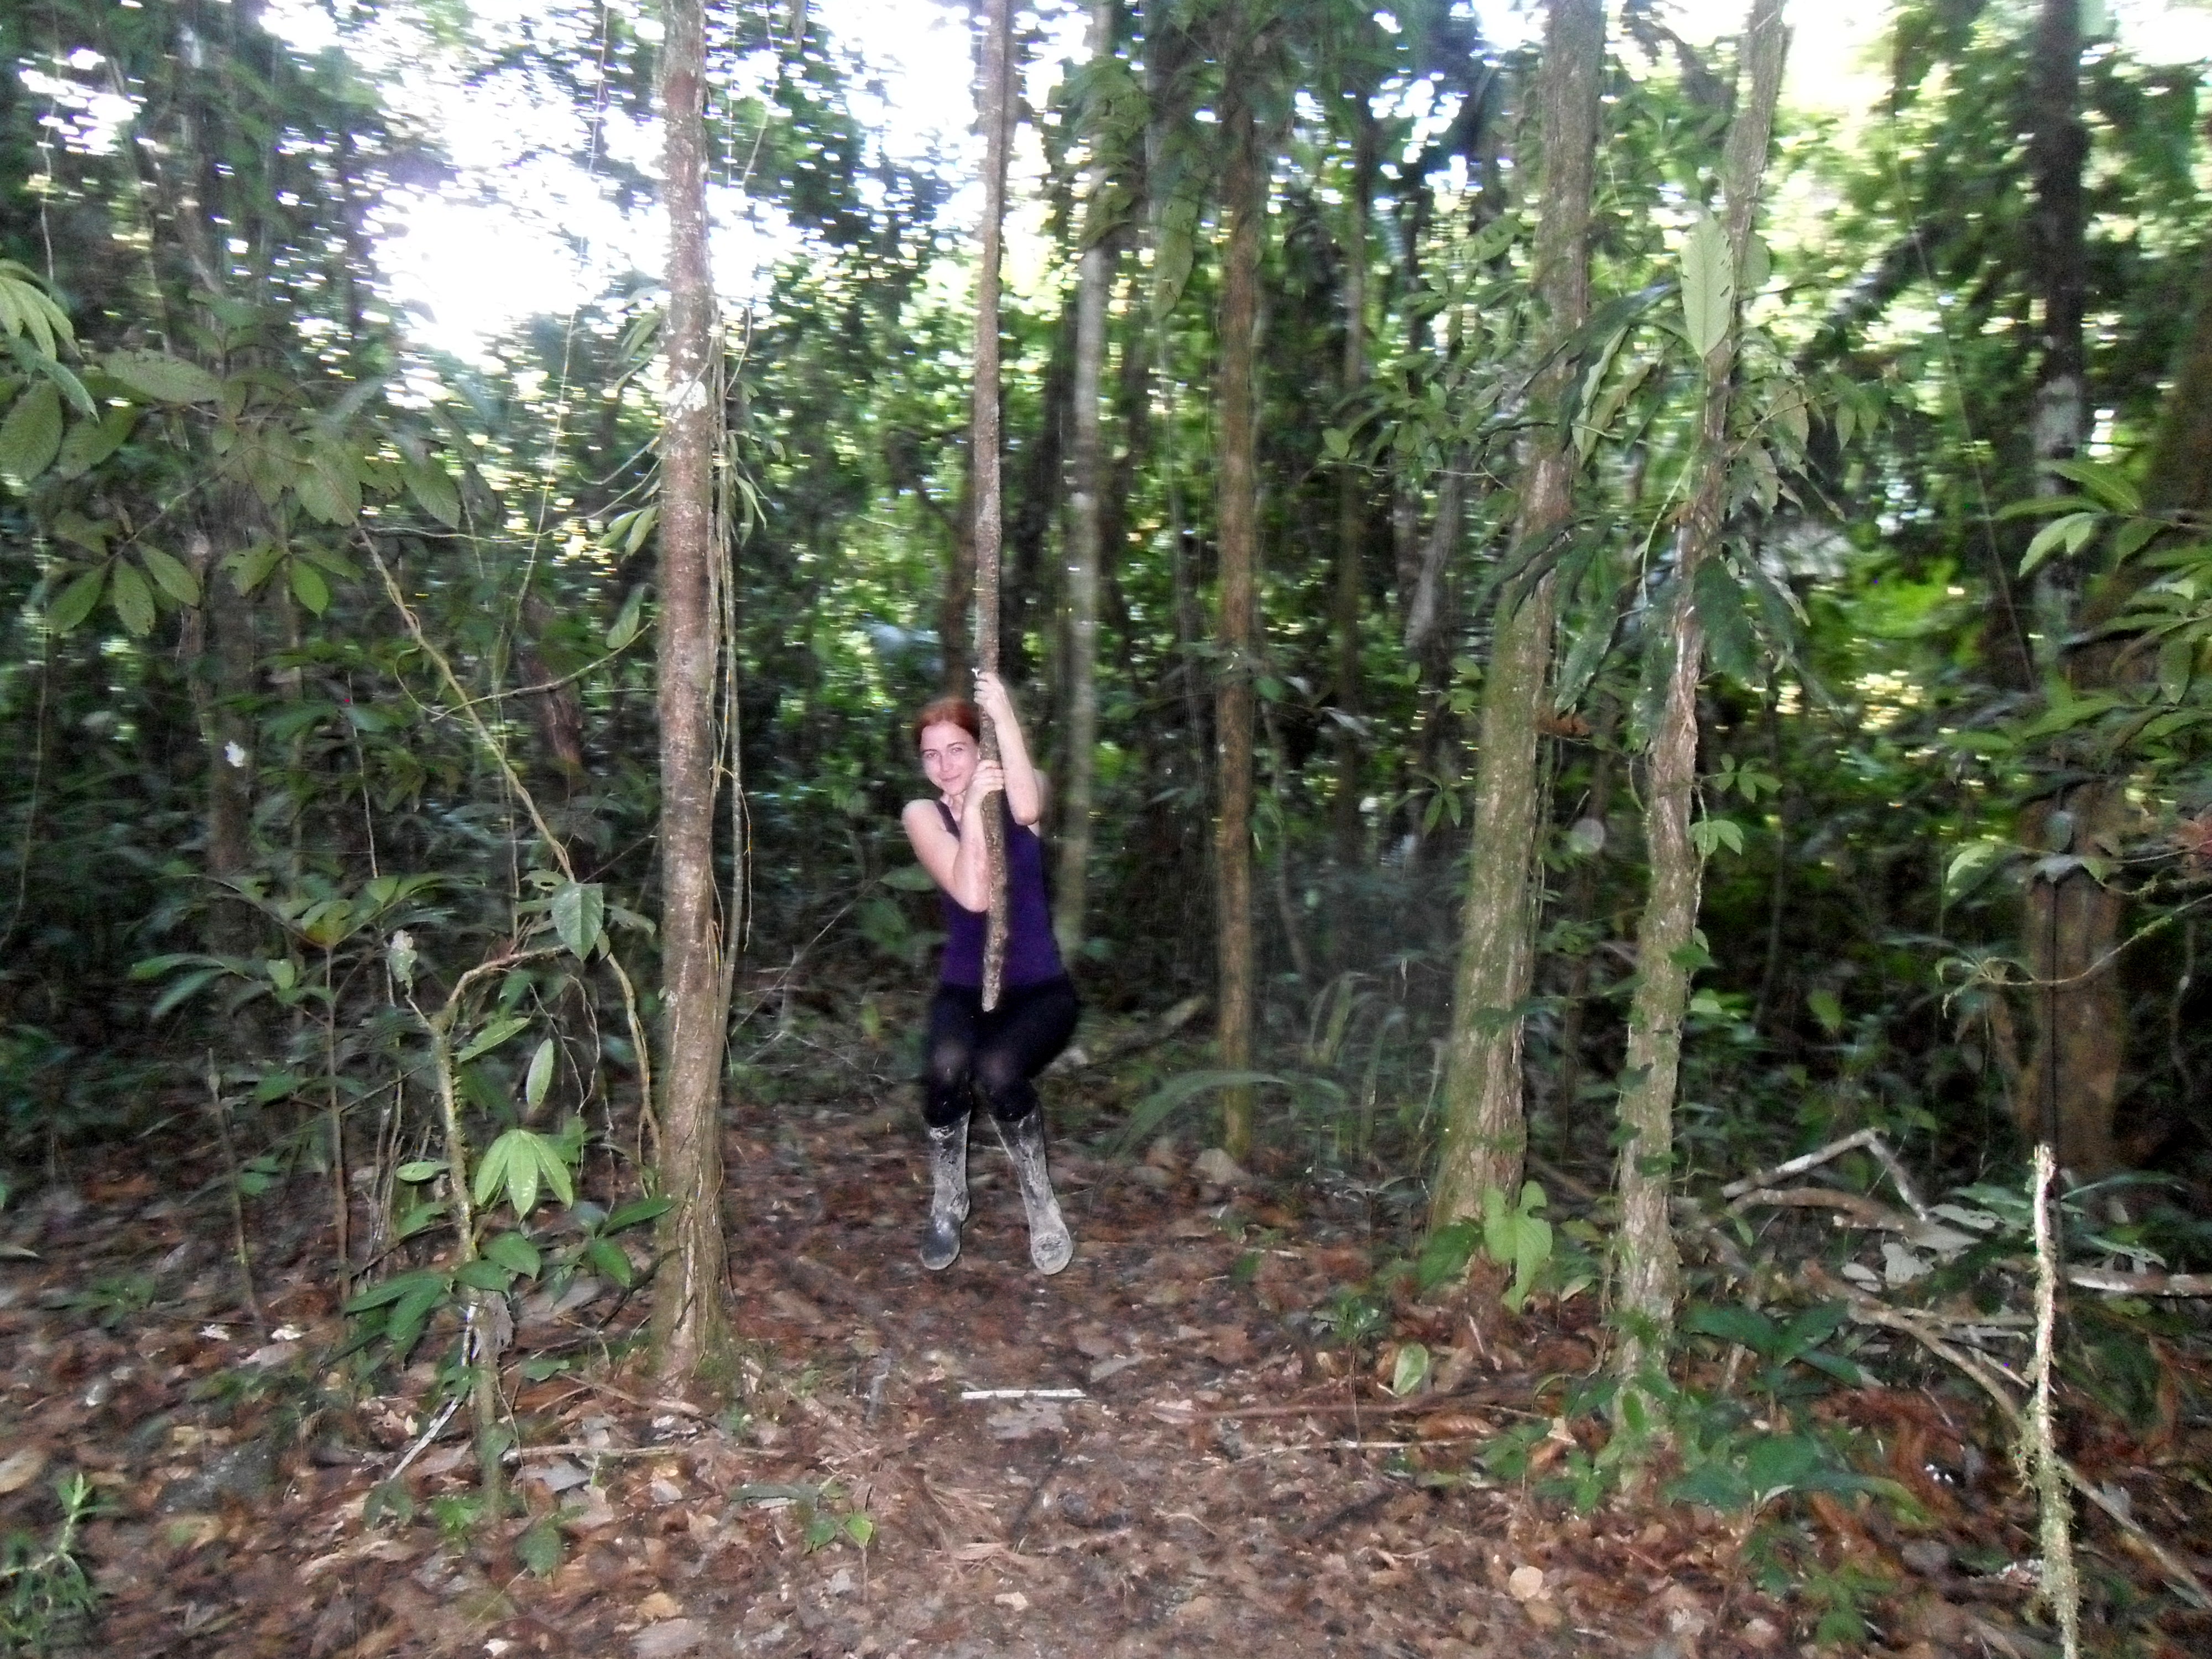 How I Got Lost in the Amazon Rainforest in Ecuador